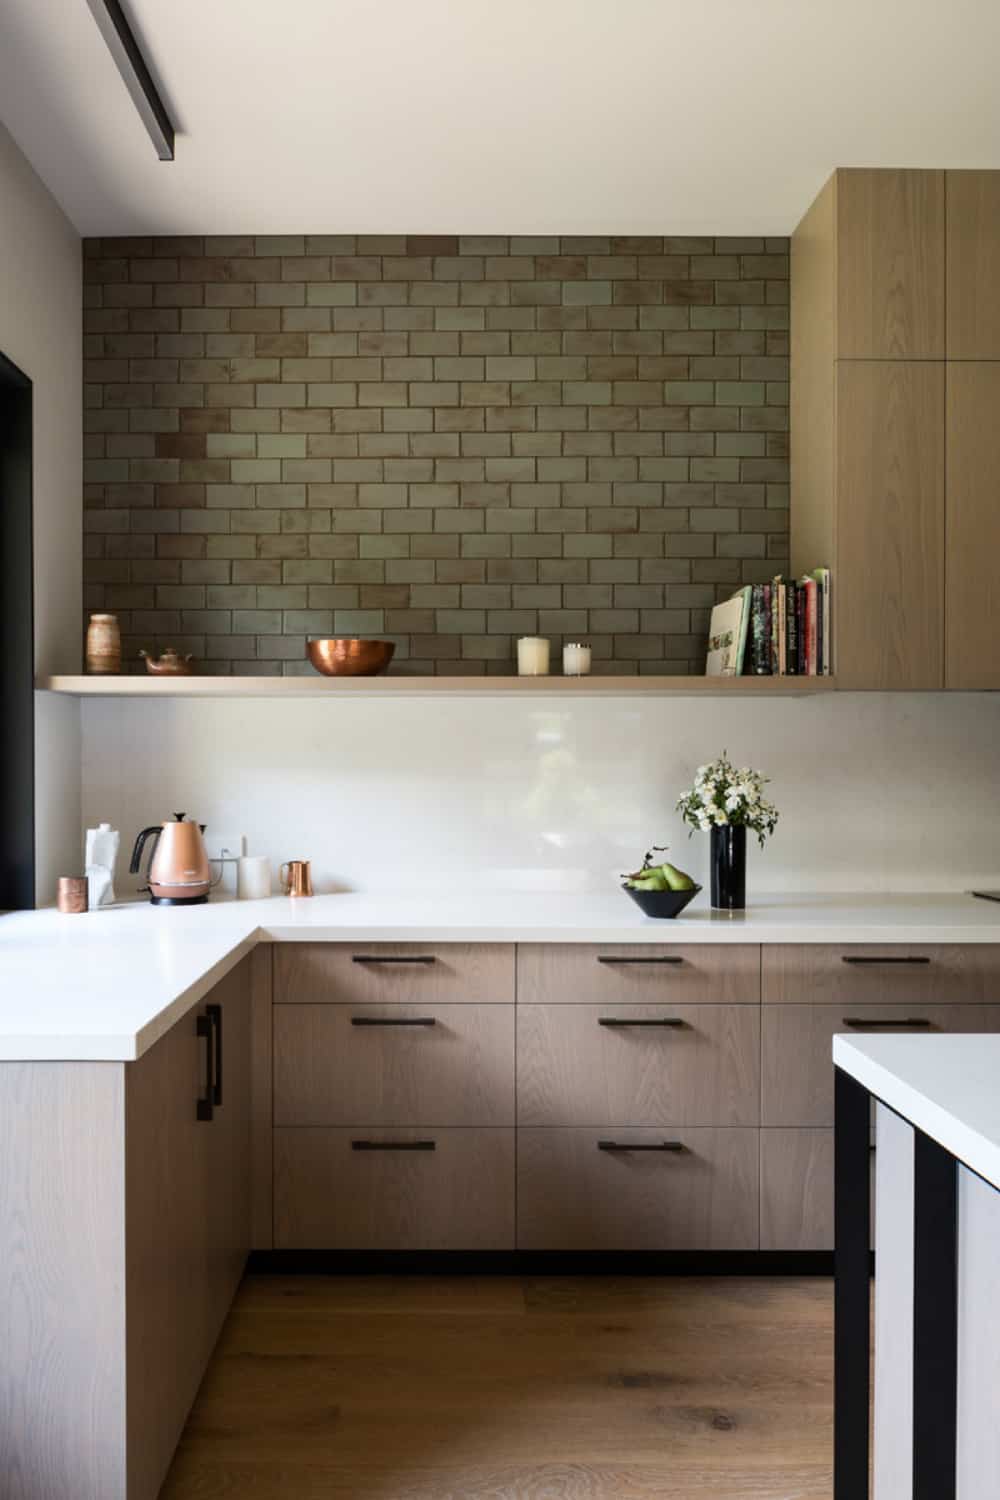 Simple kitchen design involves Corian countertops and upper shelves